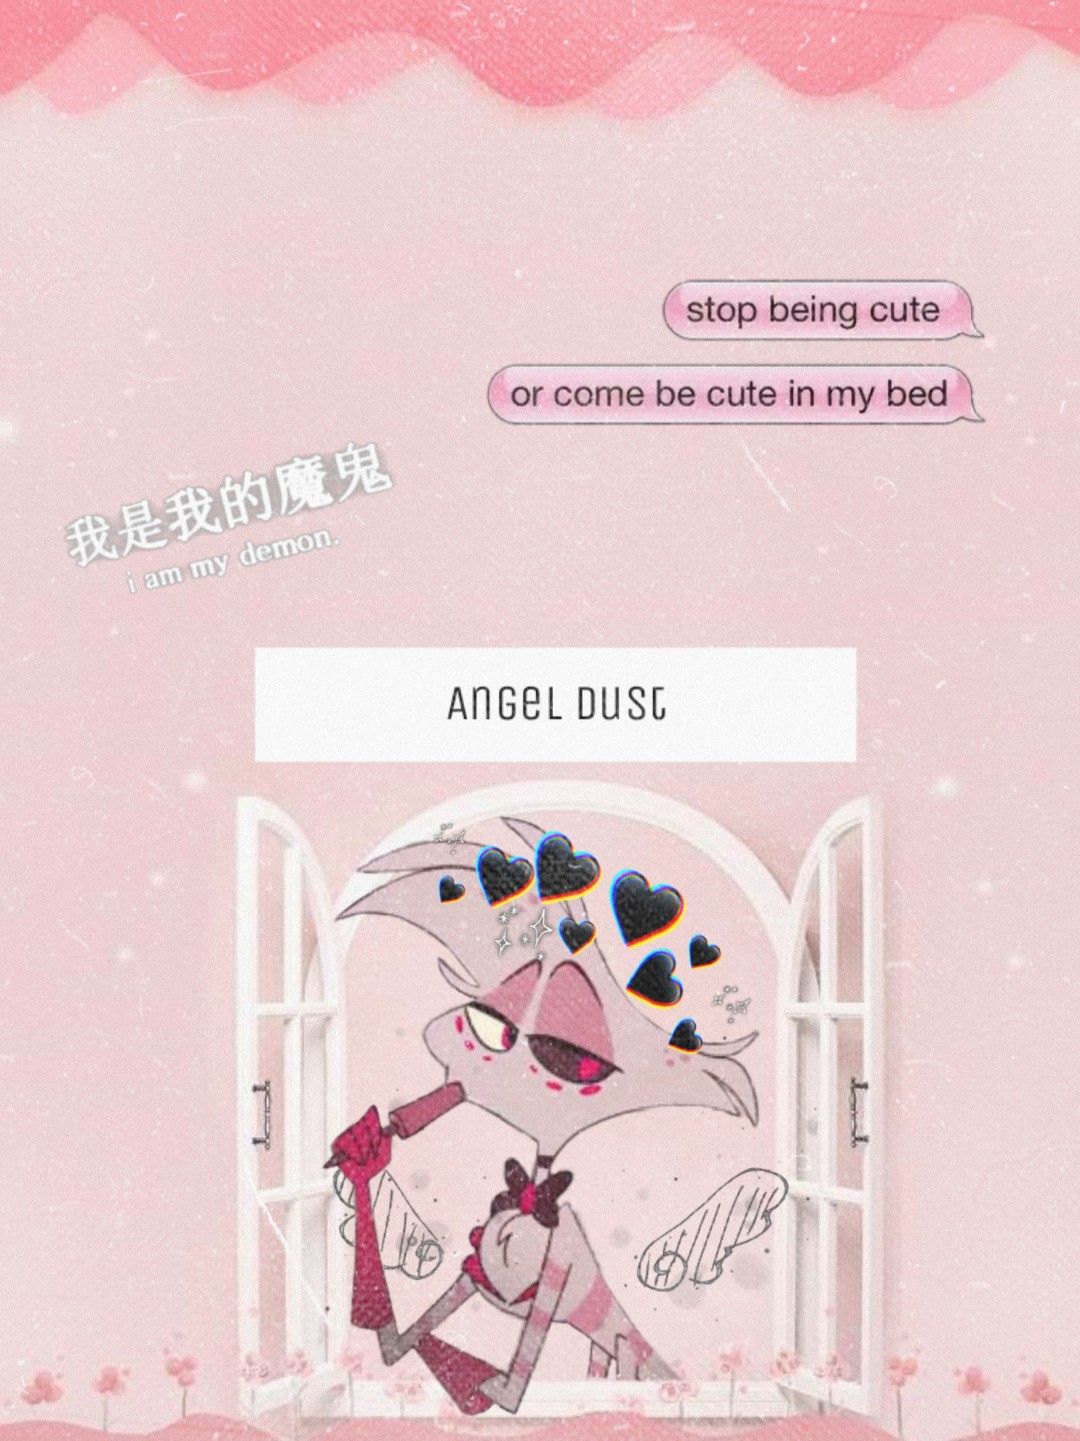 Angel dust edit